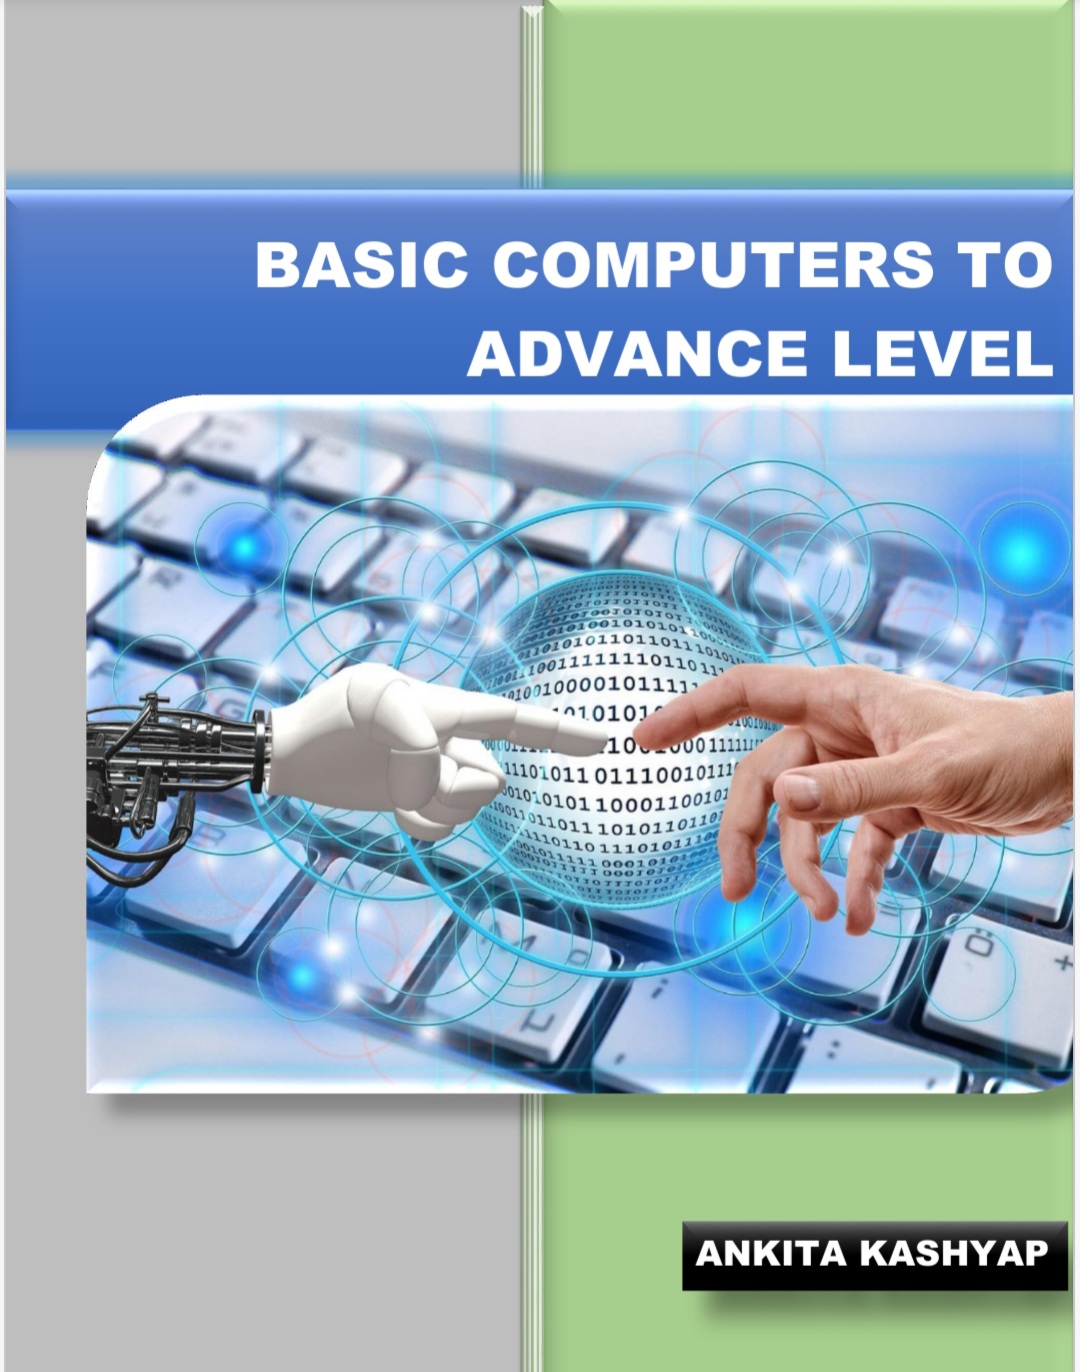 Basic Computers To Advance Level (Advance Batch 2)